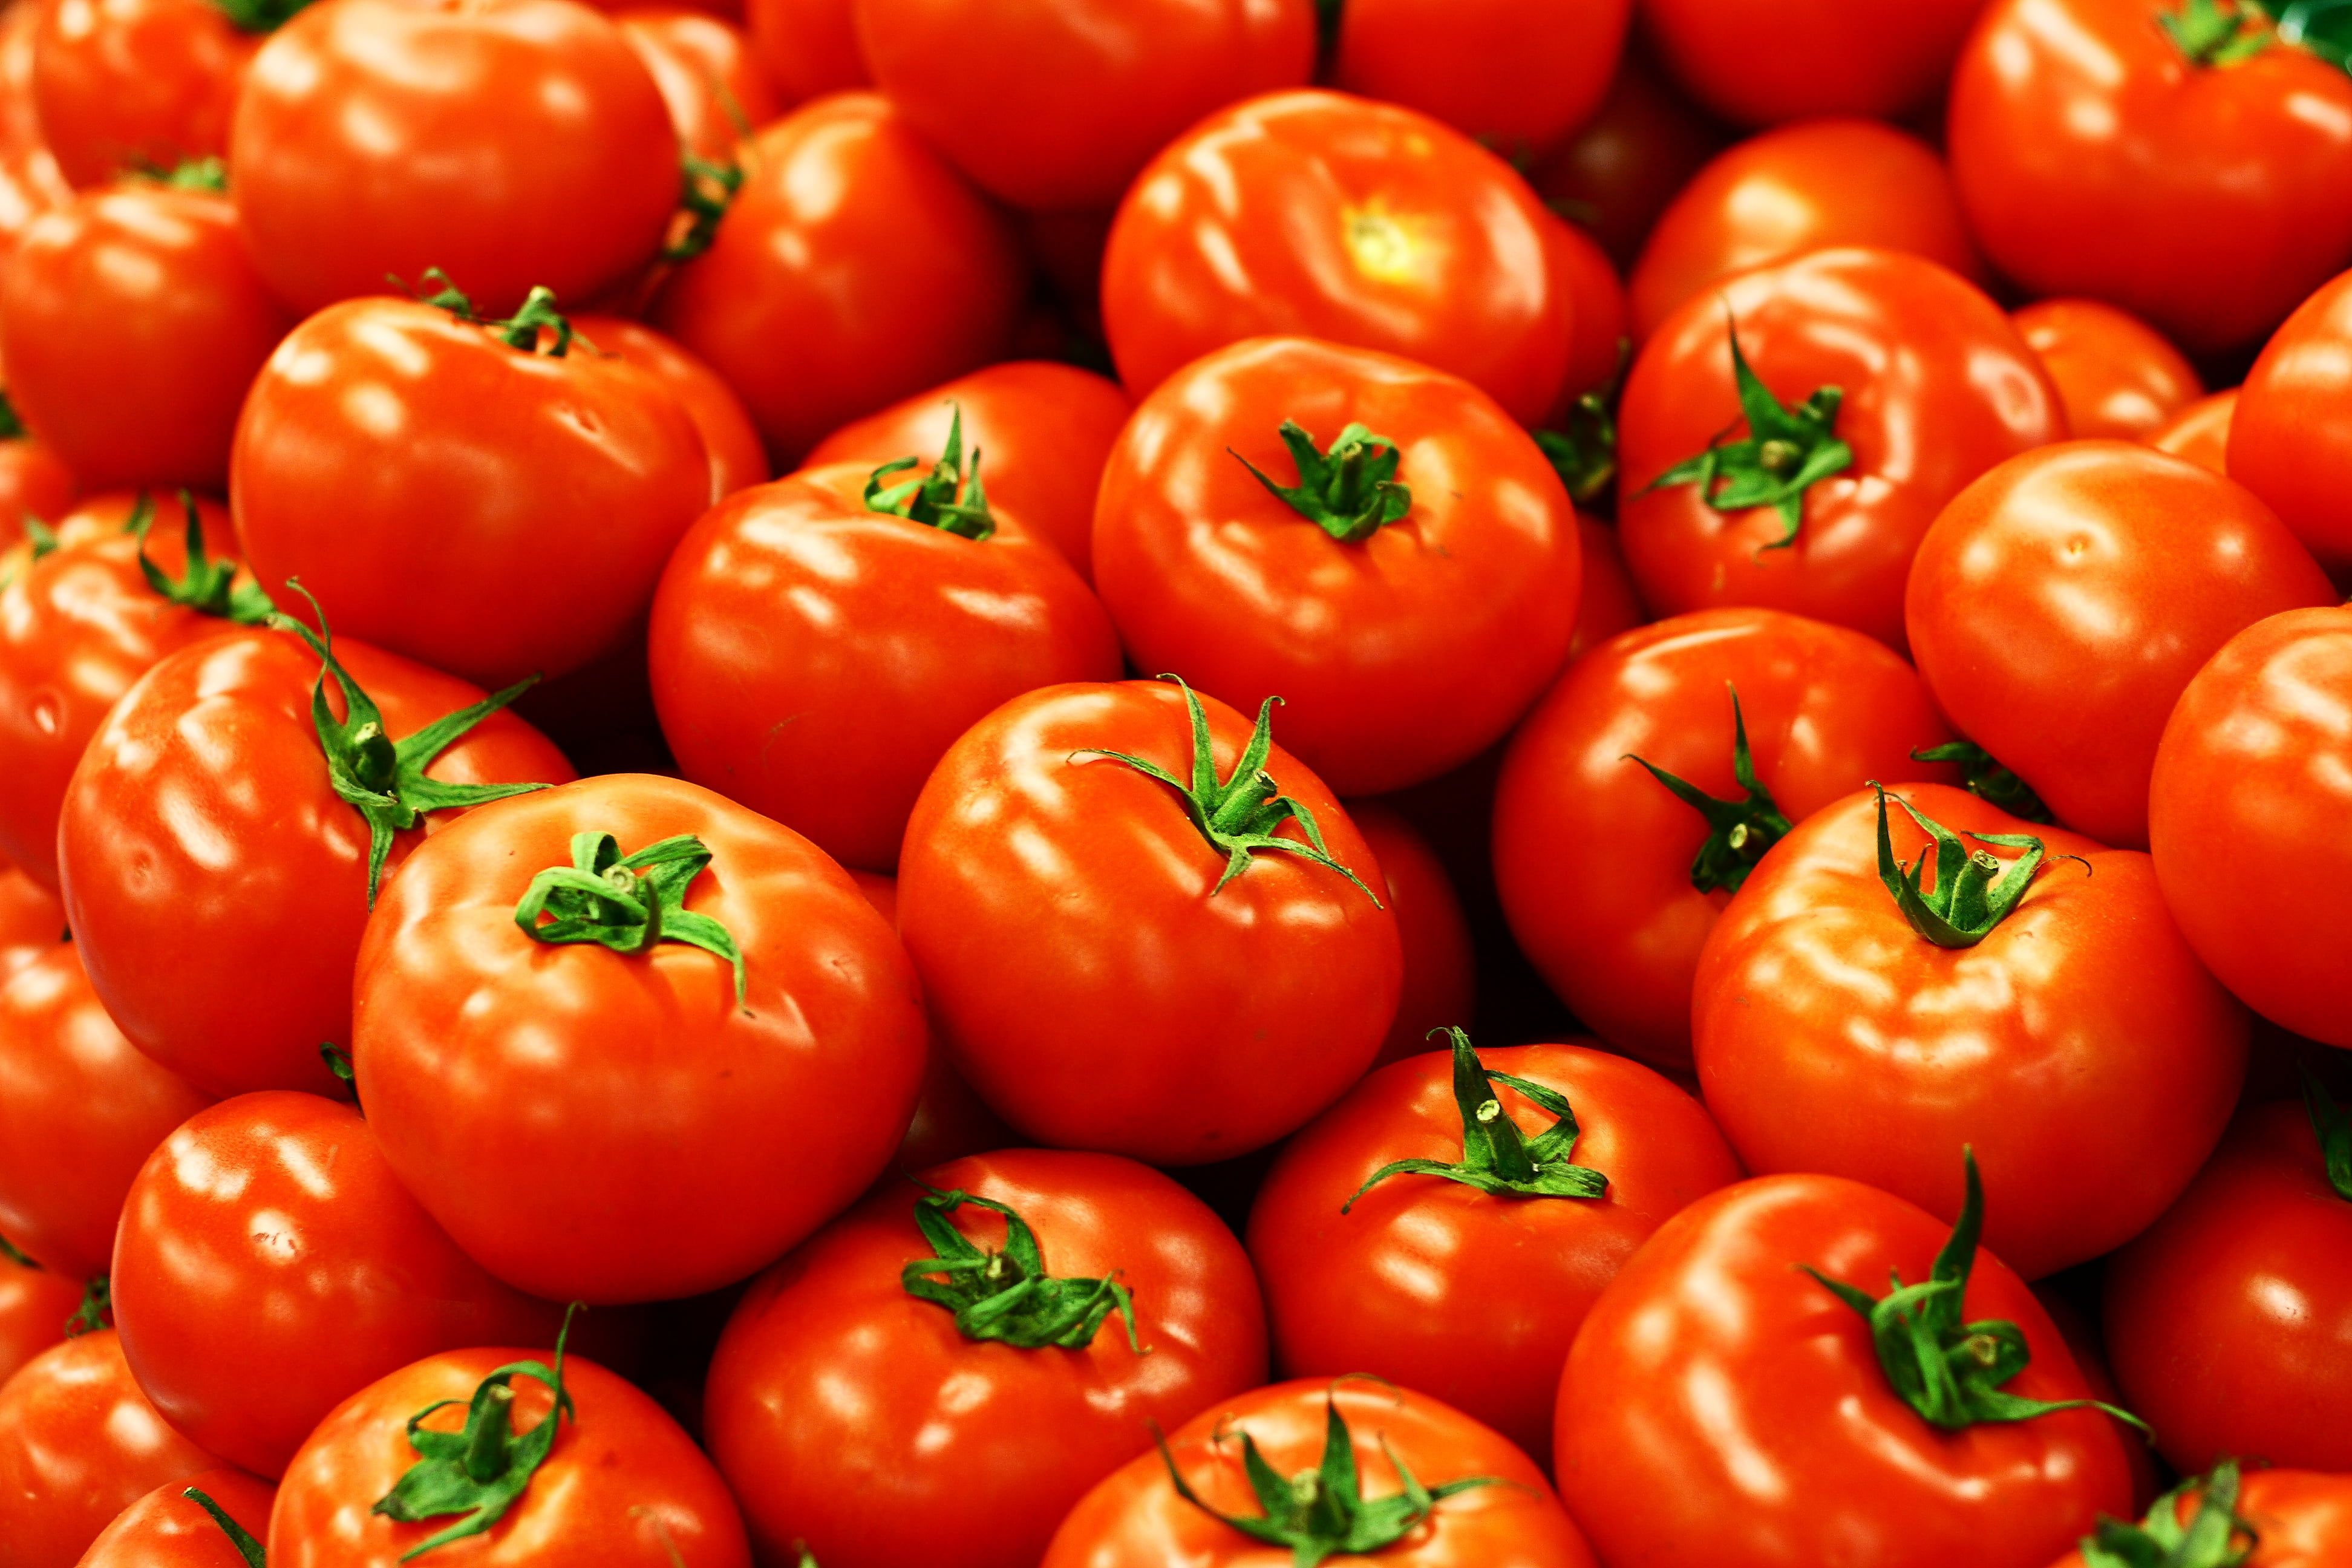 tomato lot, tomatoes, tomatoes #tomato #lot #vegetable #food #freshness #red #organic K #wallpaper #hdwallpaper #desktop. Tomato, Vegetables, Tomato vegetable